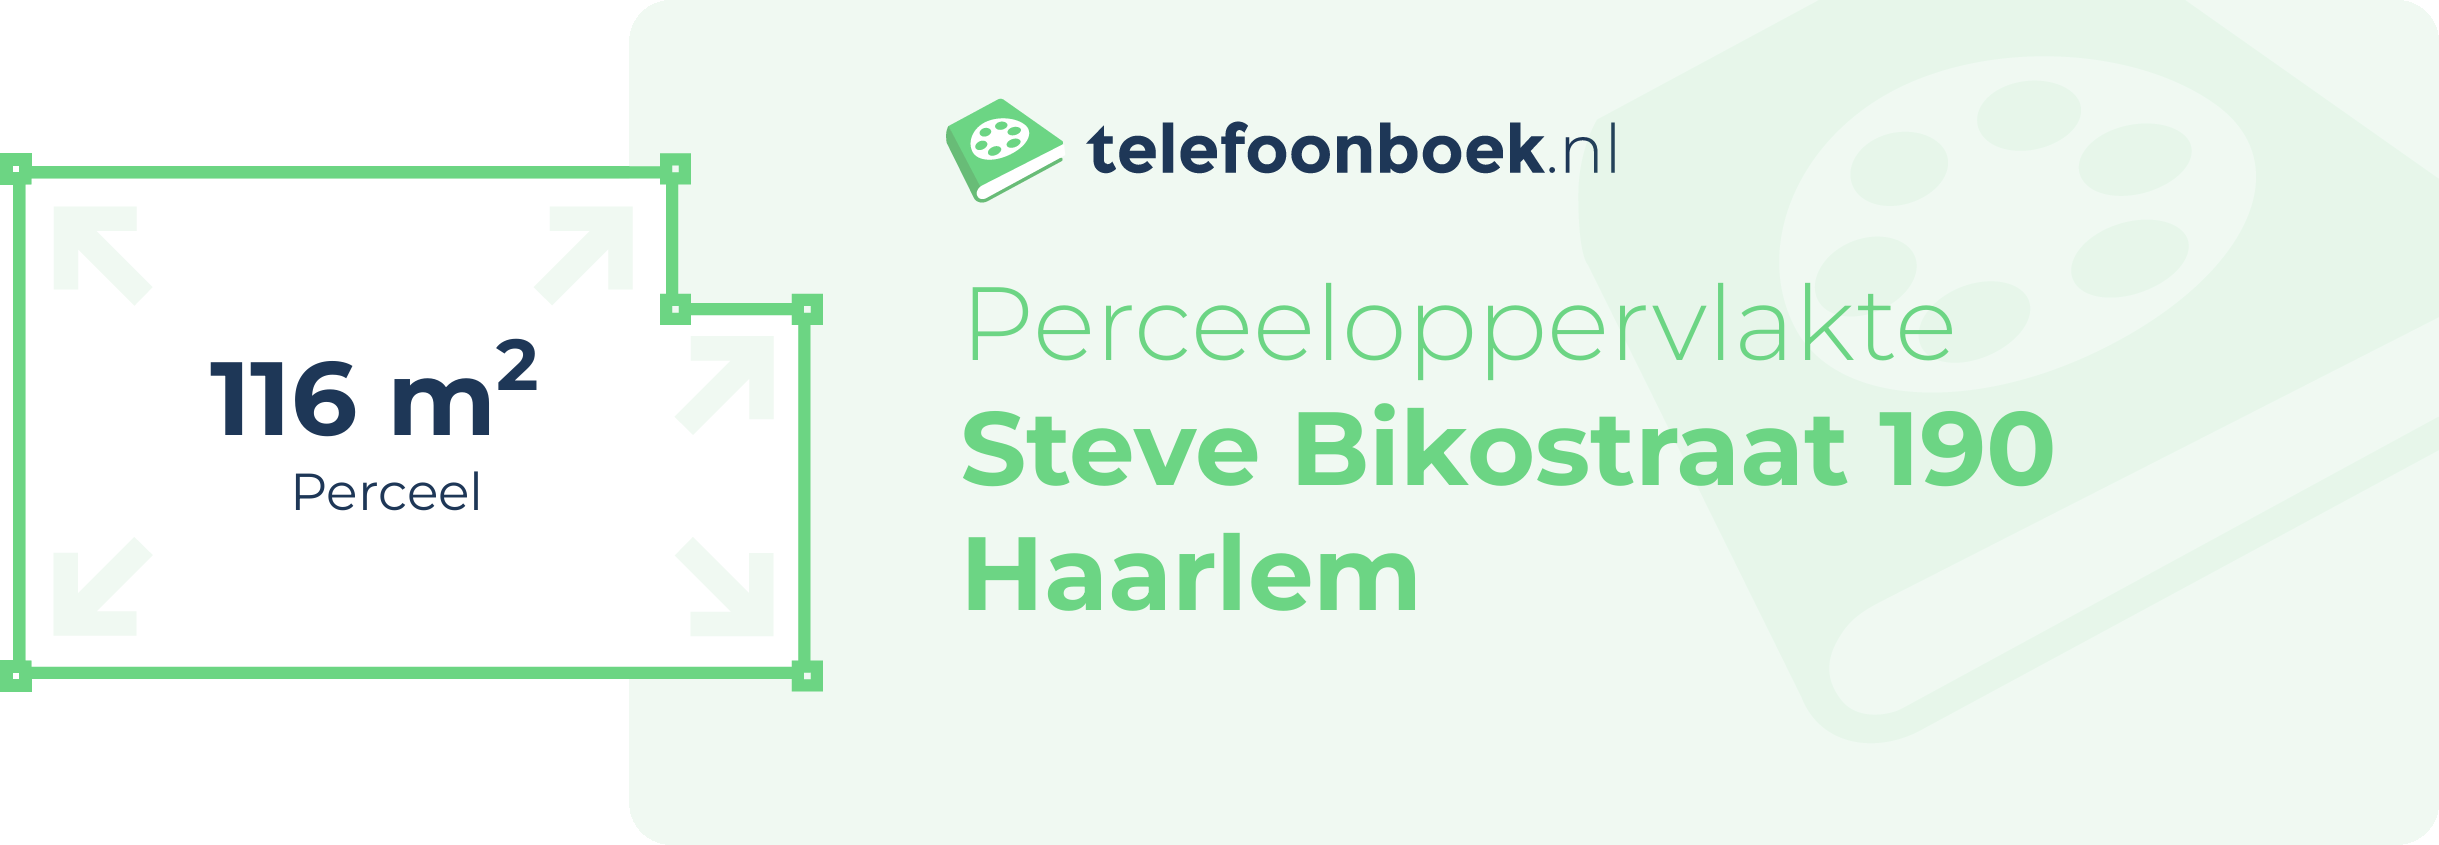 Perceeloppervlakte Steve Bikostraat 190 Haarlem